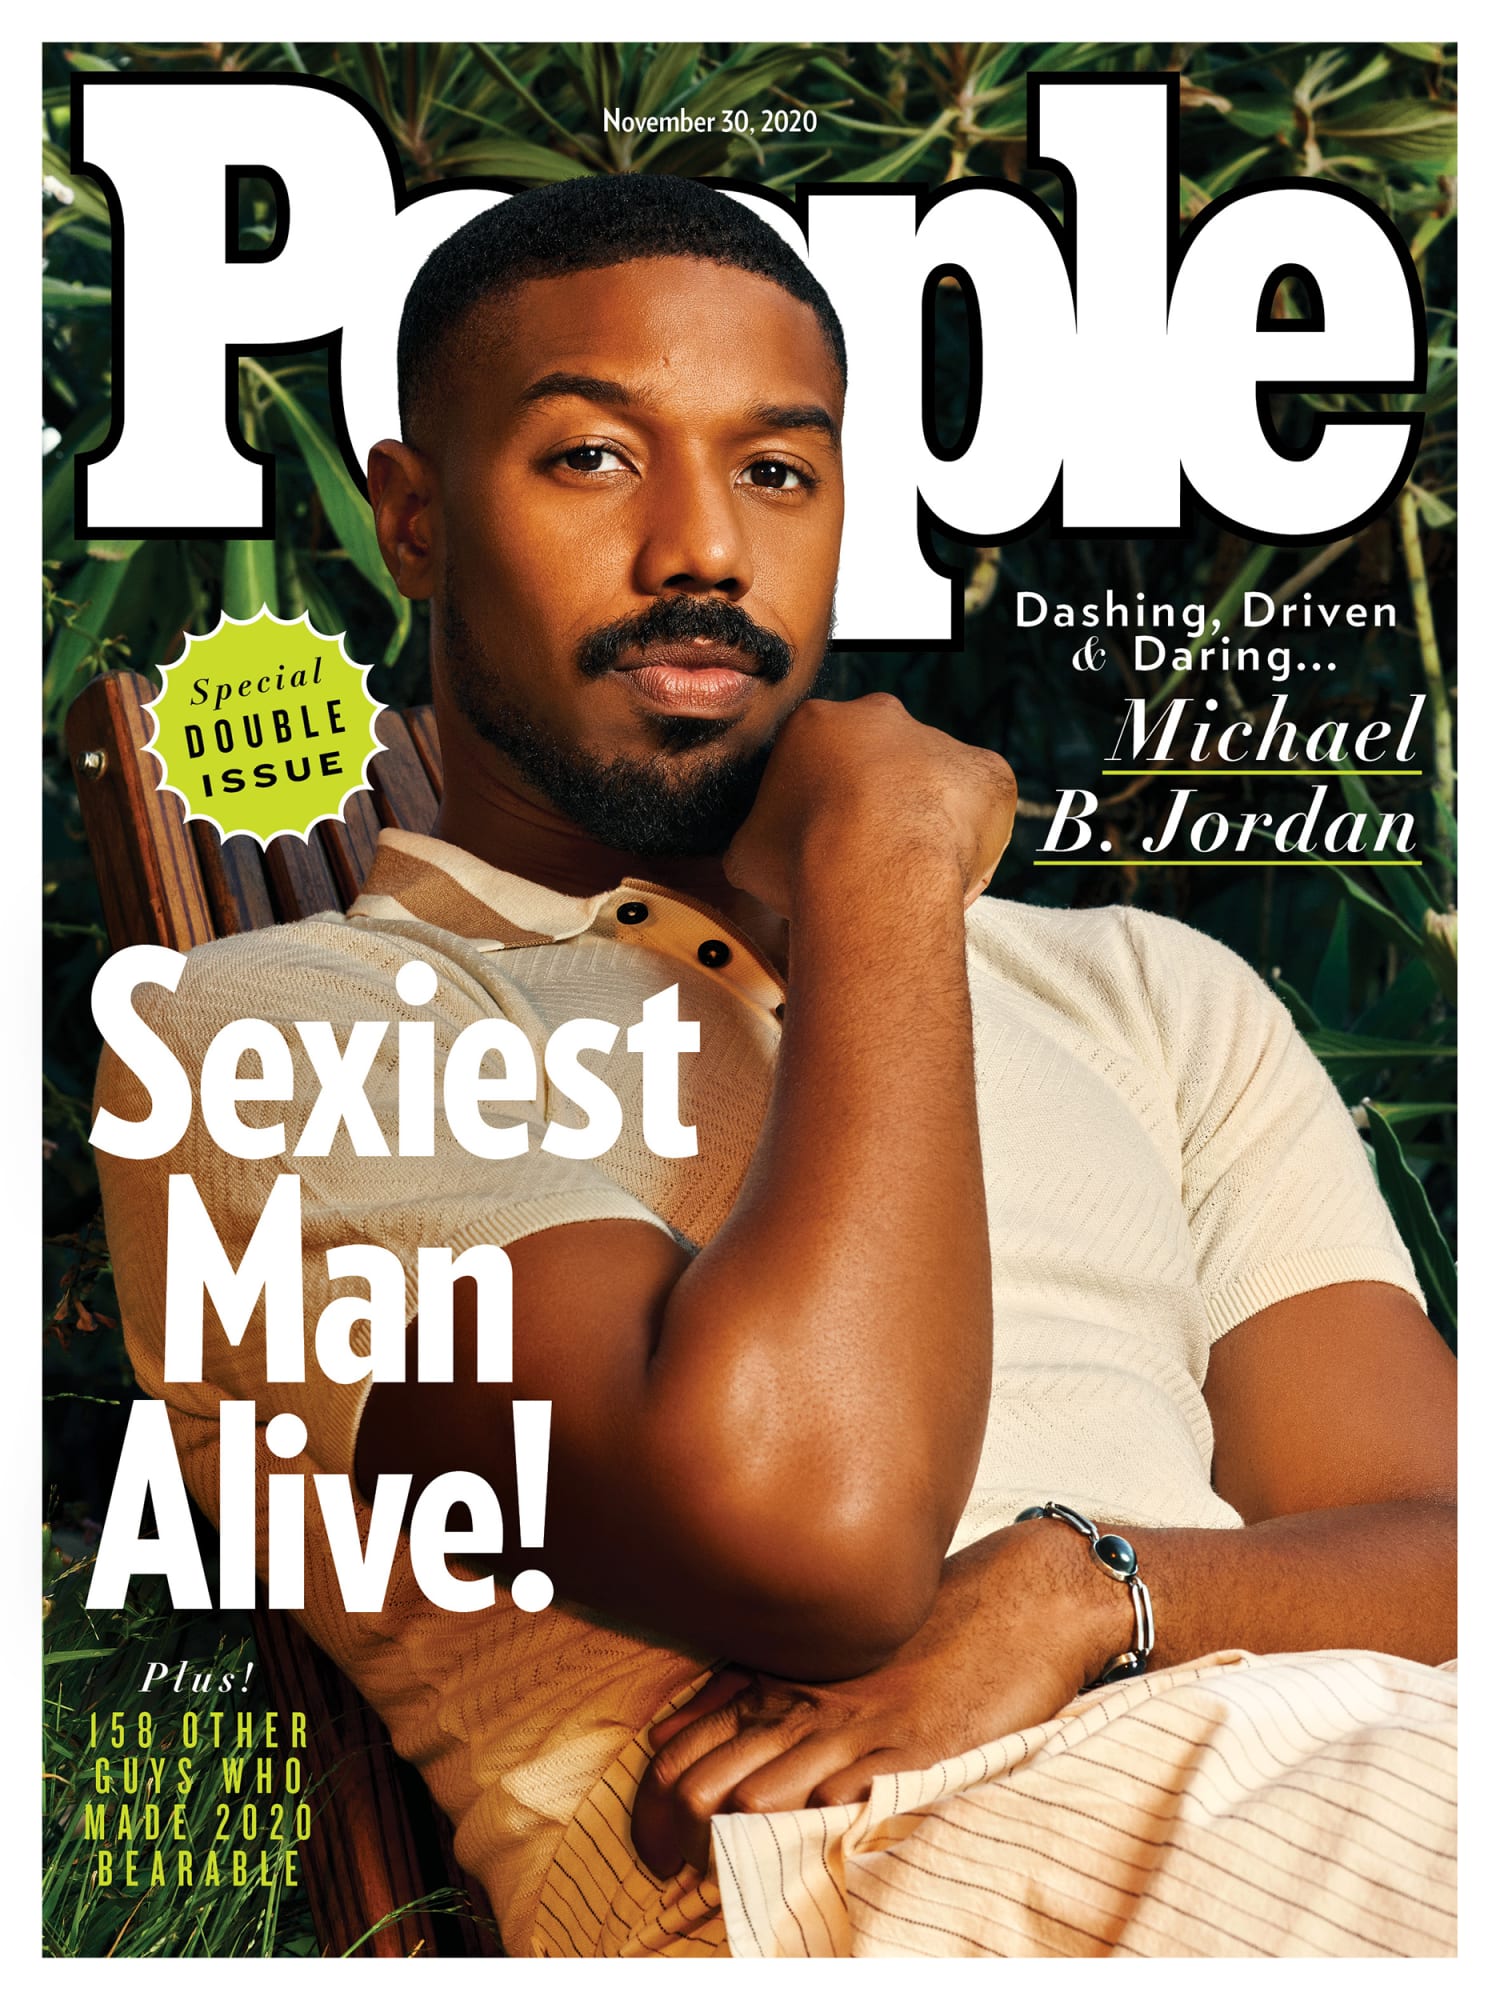 People magazine names Michael B. Jordan as Sexiest Man Alive